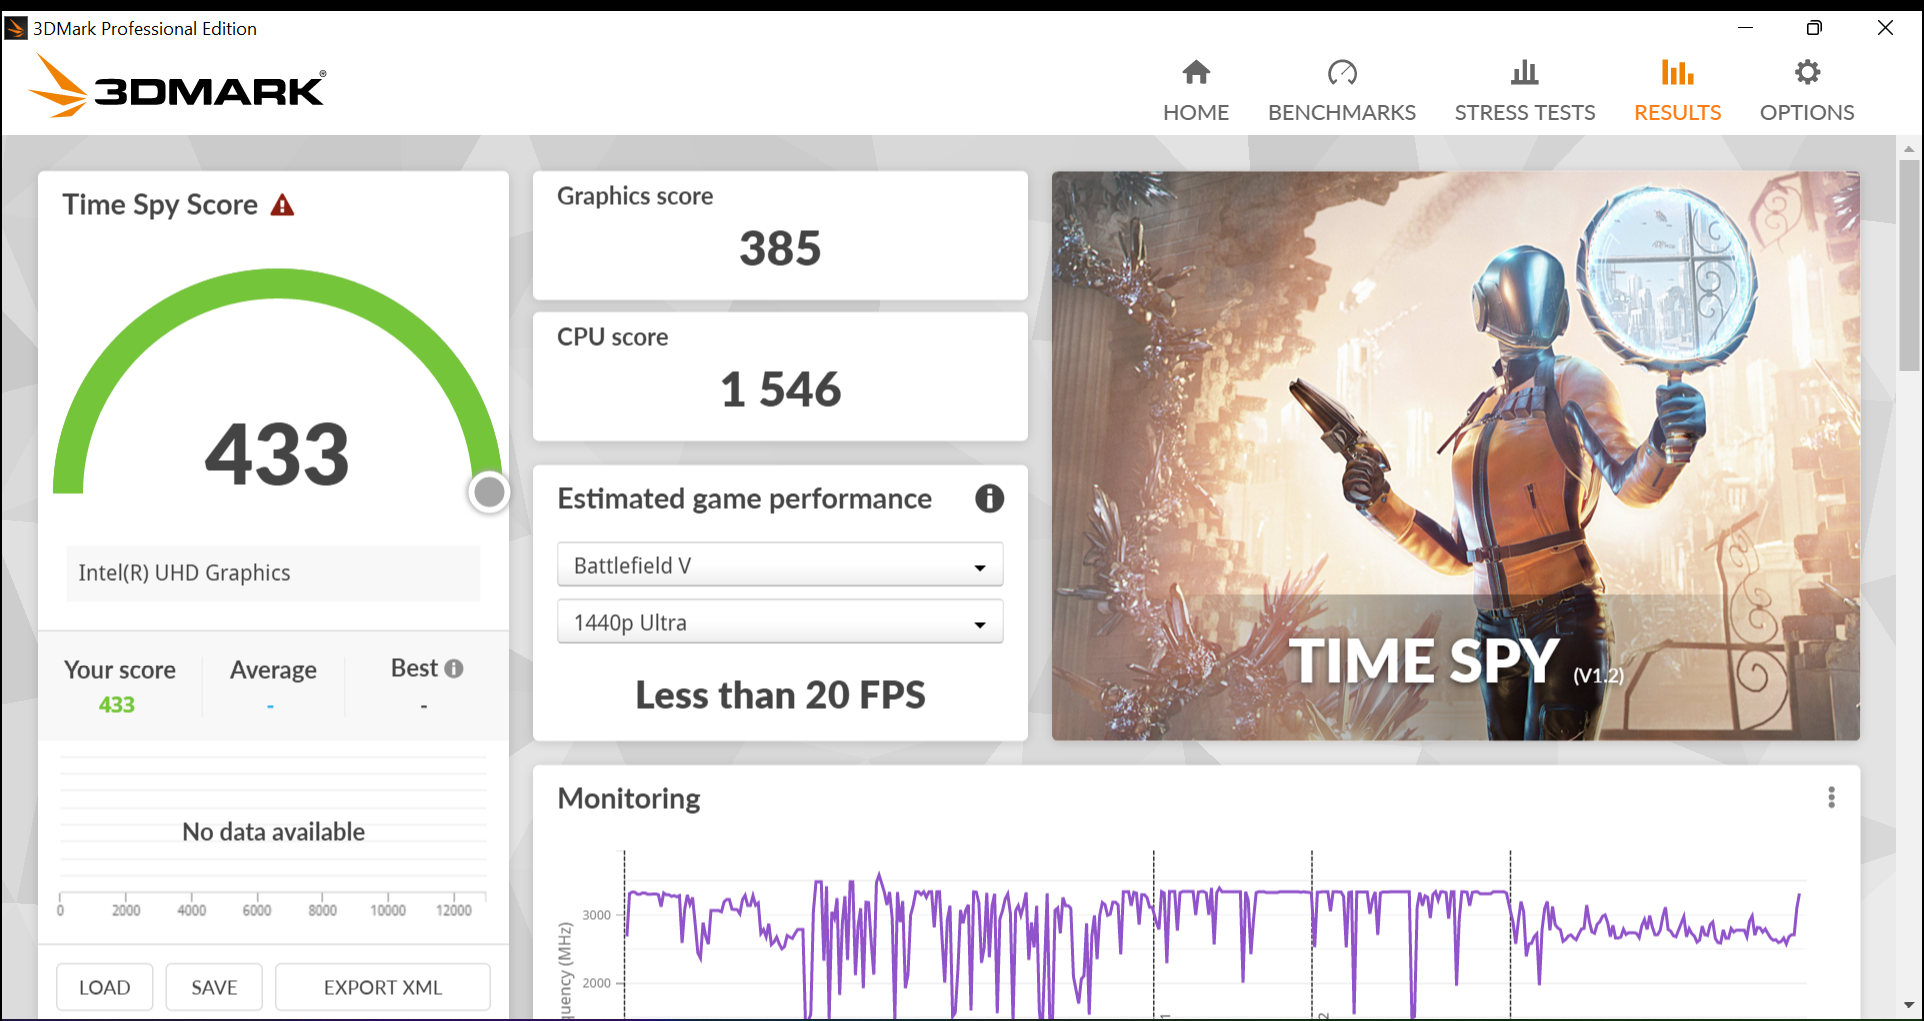 Asus Vivobook Slate 3DMark TimeSpy